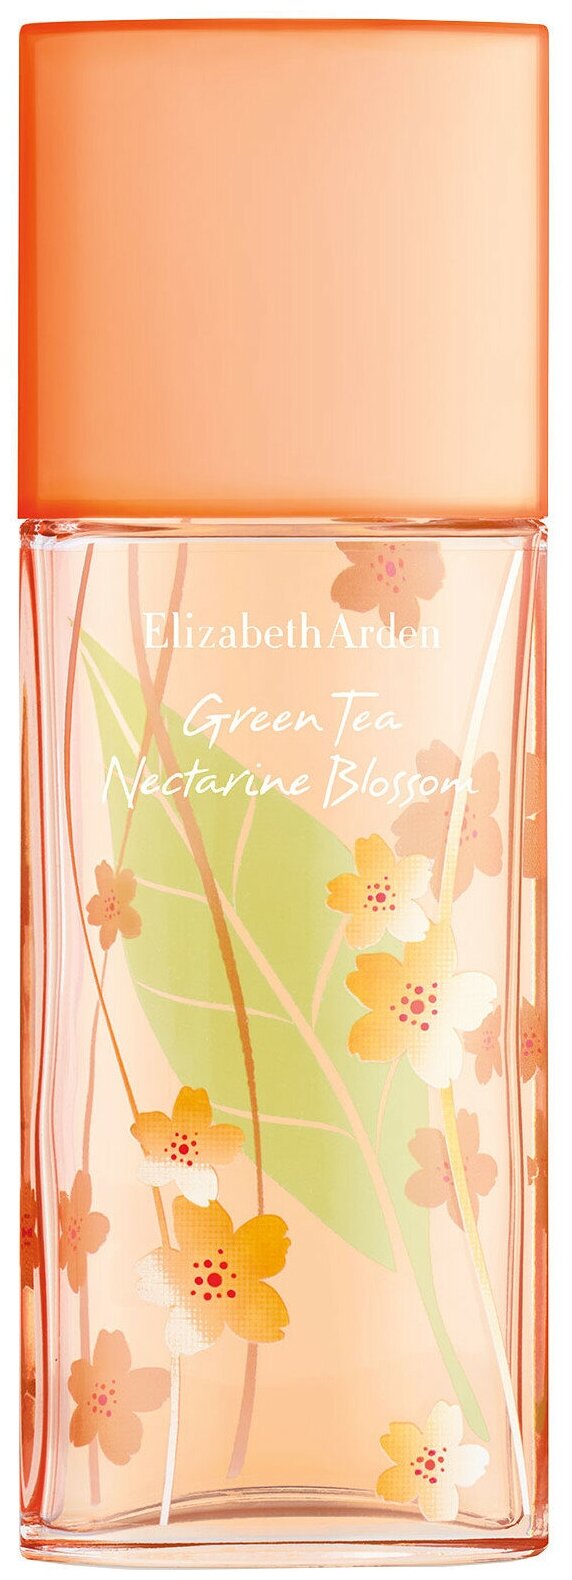 Elizabeth Arden Green Tea Nectarine Blossom туалетная вода 100мл